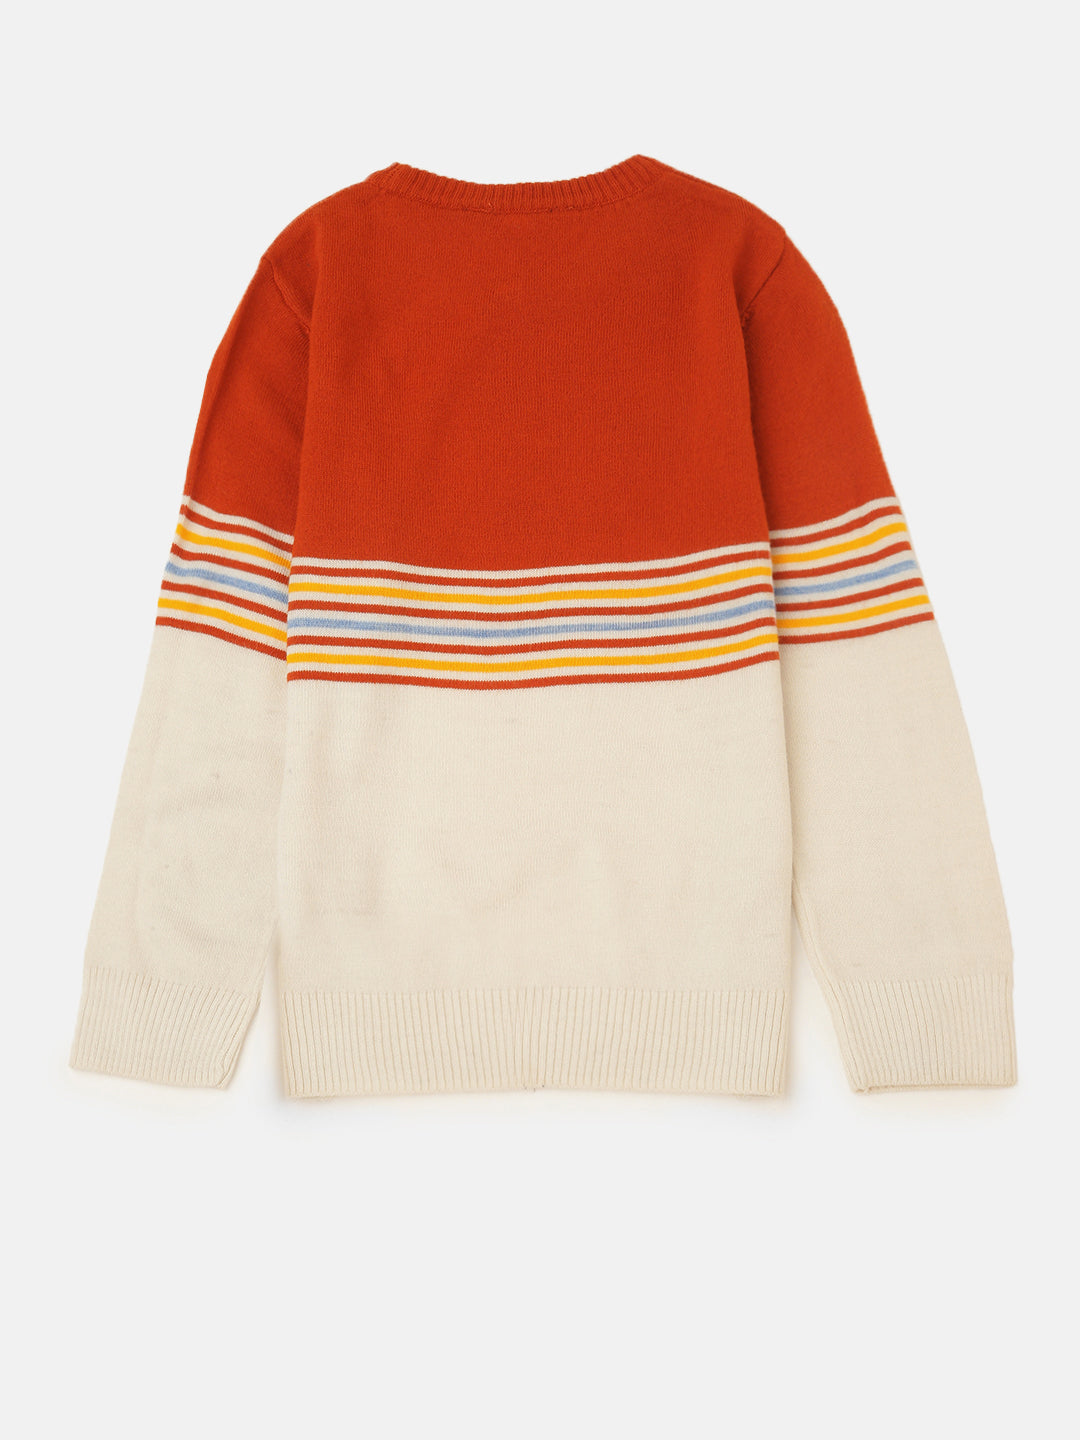 Kids - Boys Winter Sweatshirt Orange